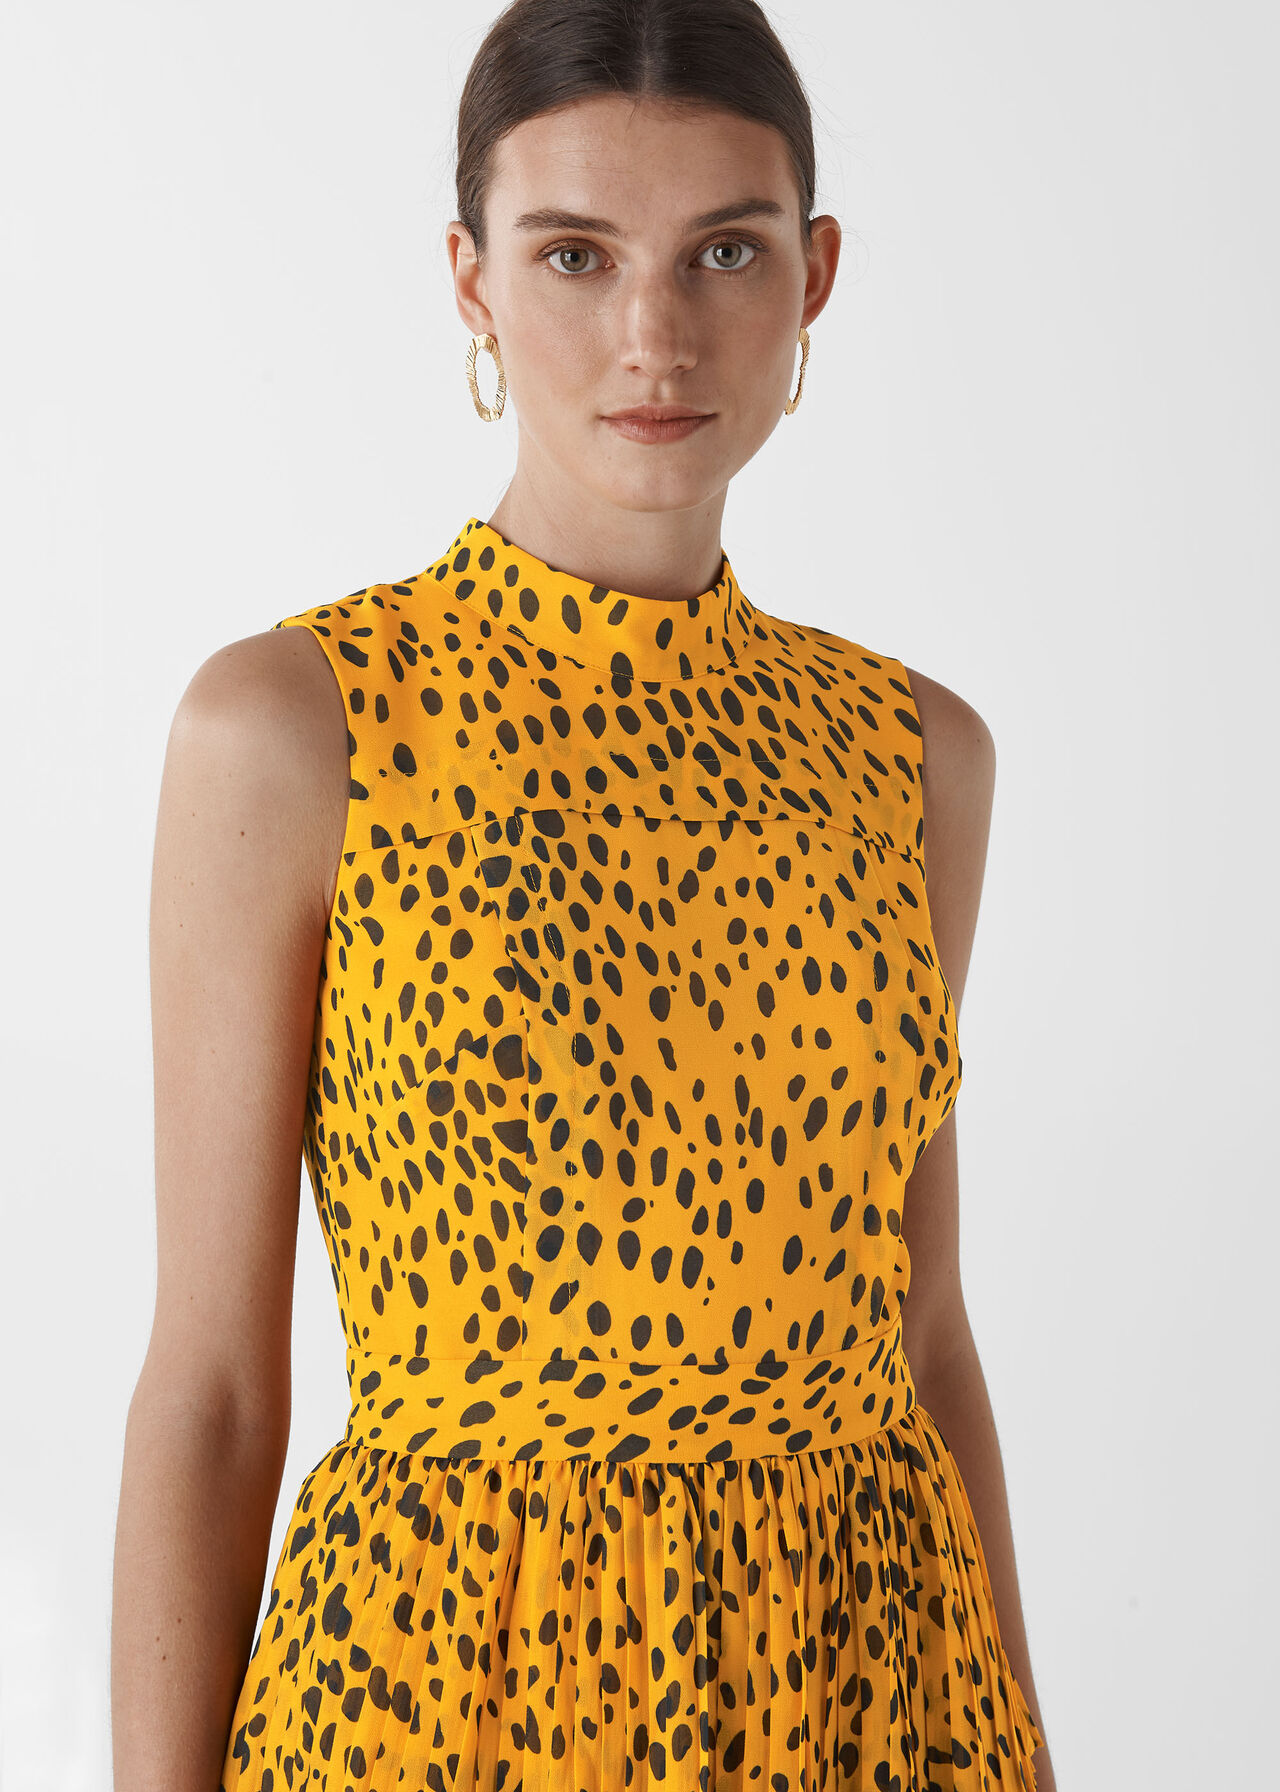 Animal Print Tiered Dress Yellow/Multi